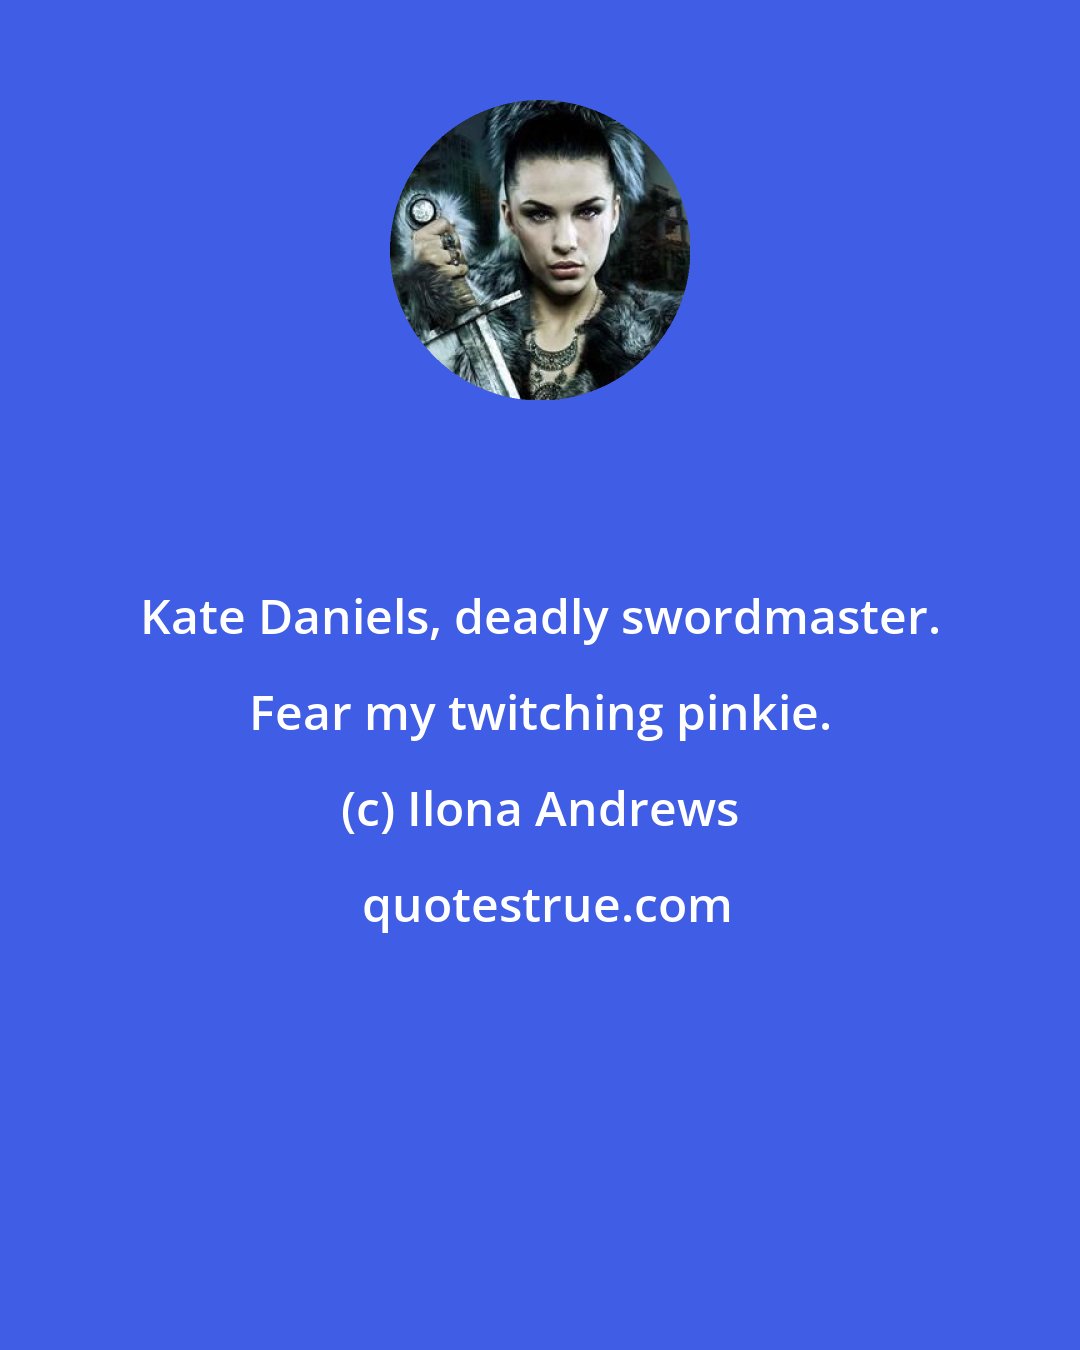 Ilona Andrews: Kate Daniels, deadly swordmaster. Fear my twitching pinkie.